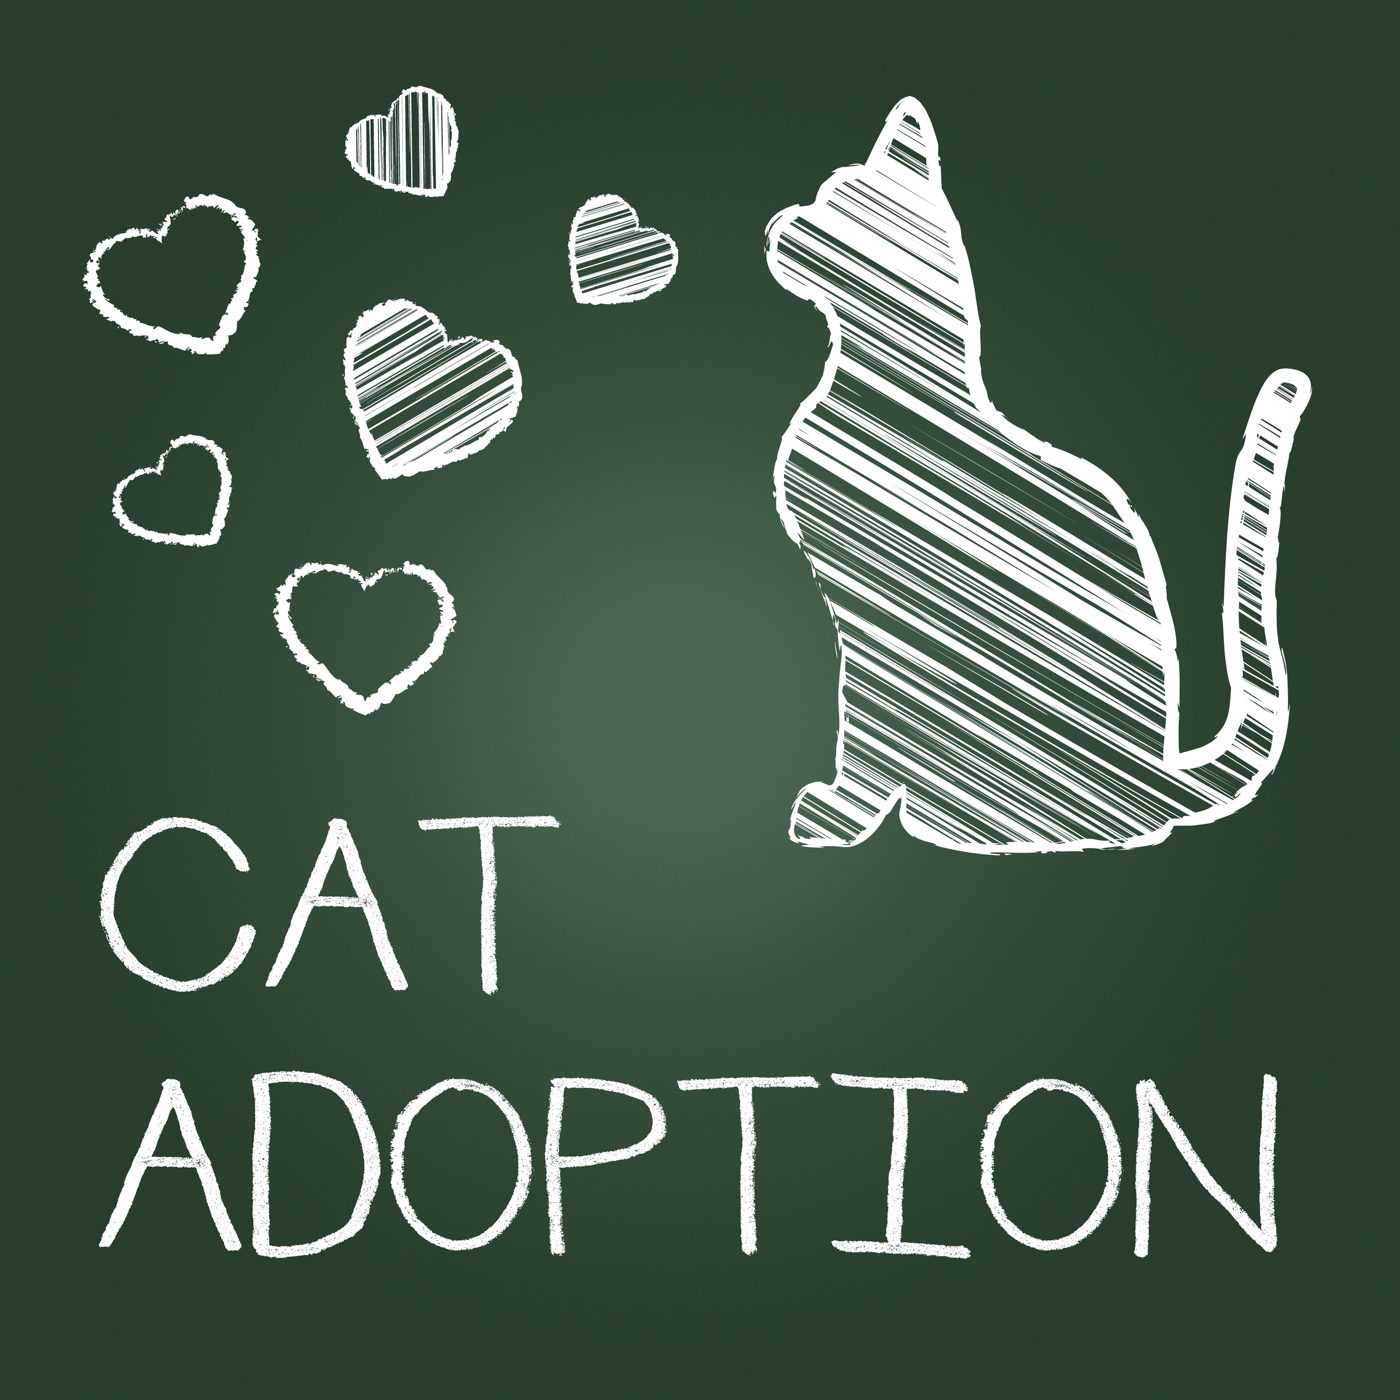 Cat adoption shows kitten pet and adopting photo